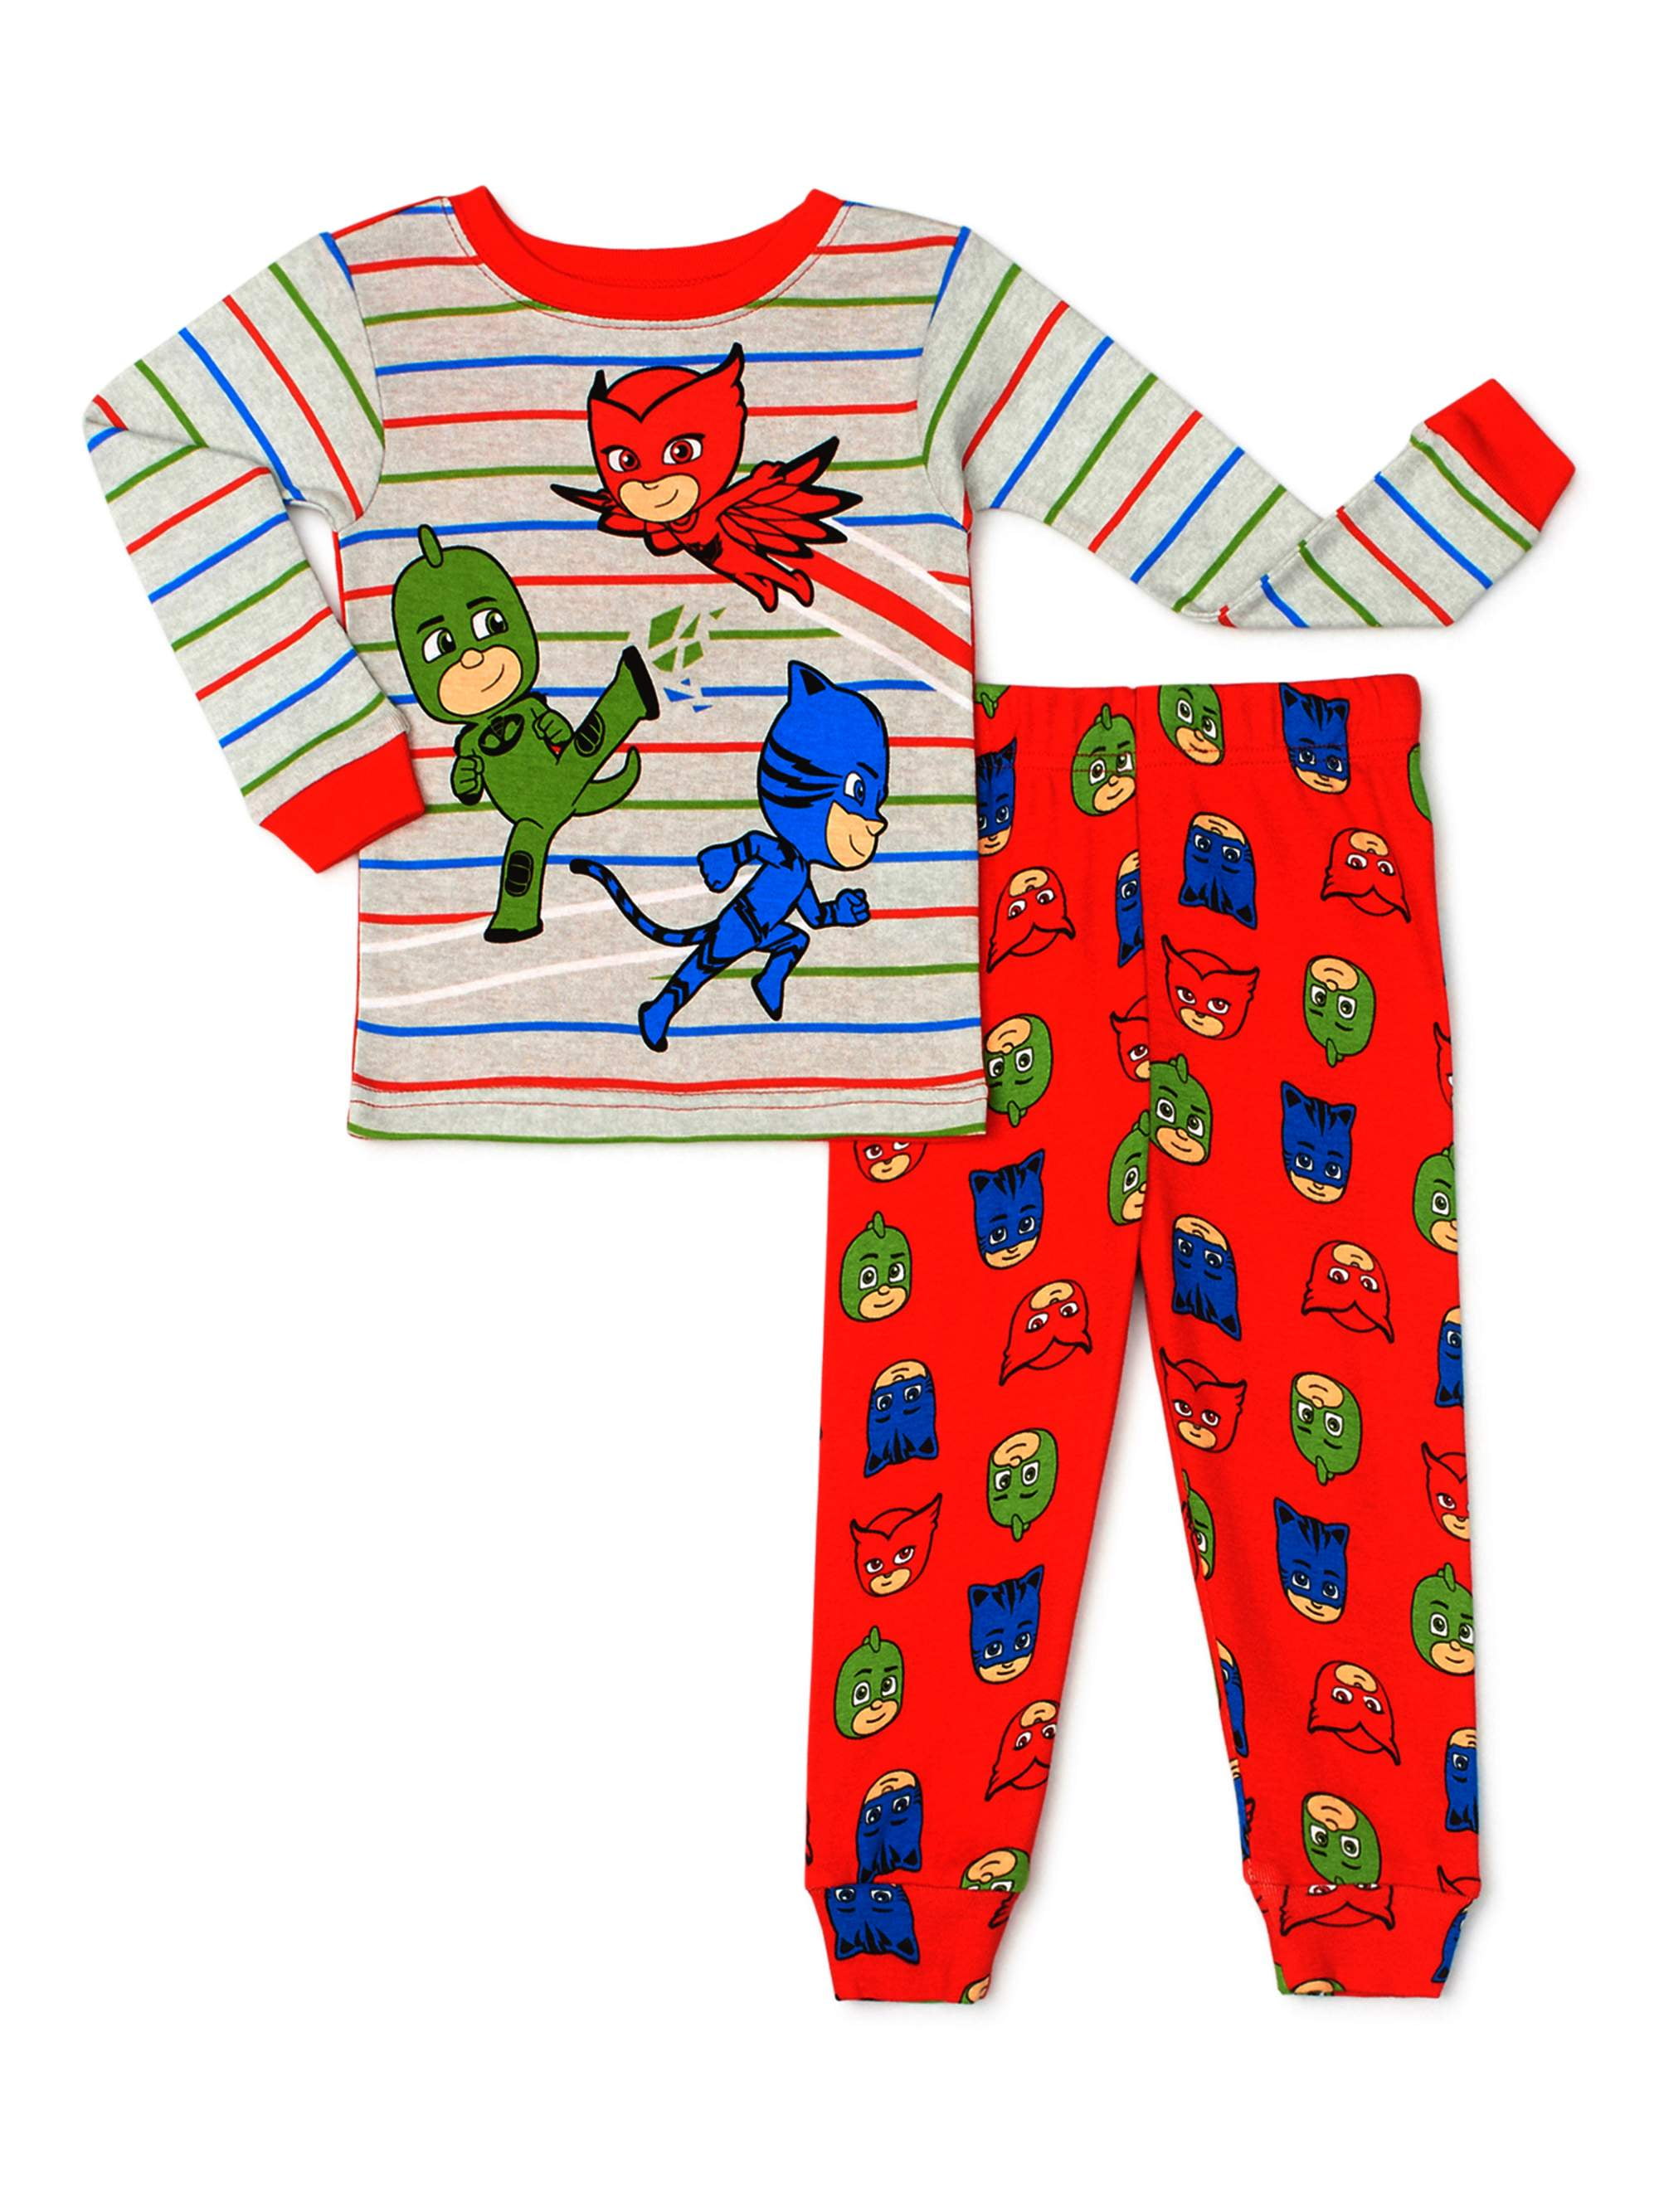 Boys Pajamas Cotton Long Sleeves Toddler Clothes Fish Kids Pjs Sleepwear 2 Piece